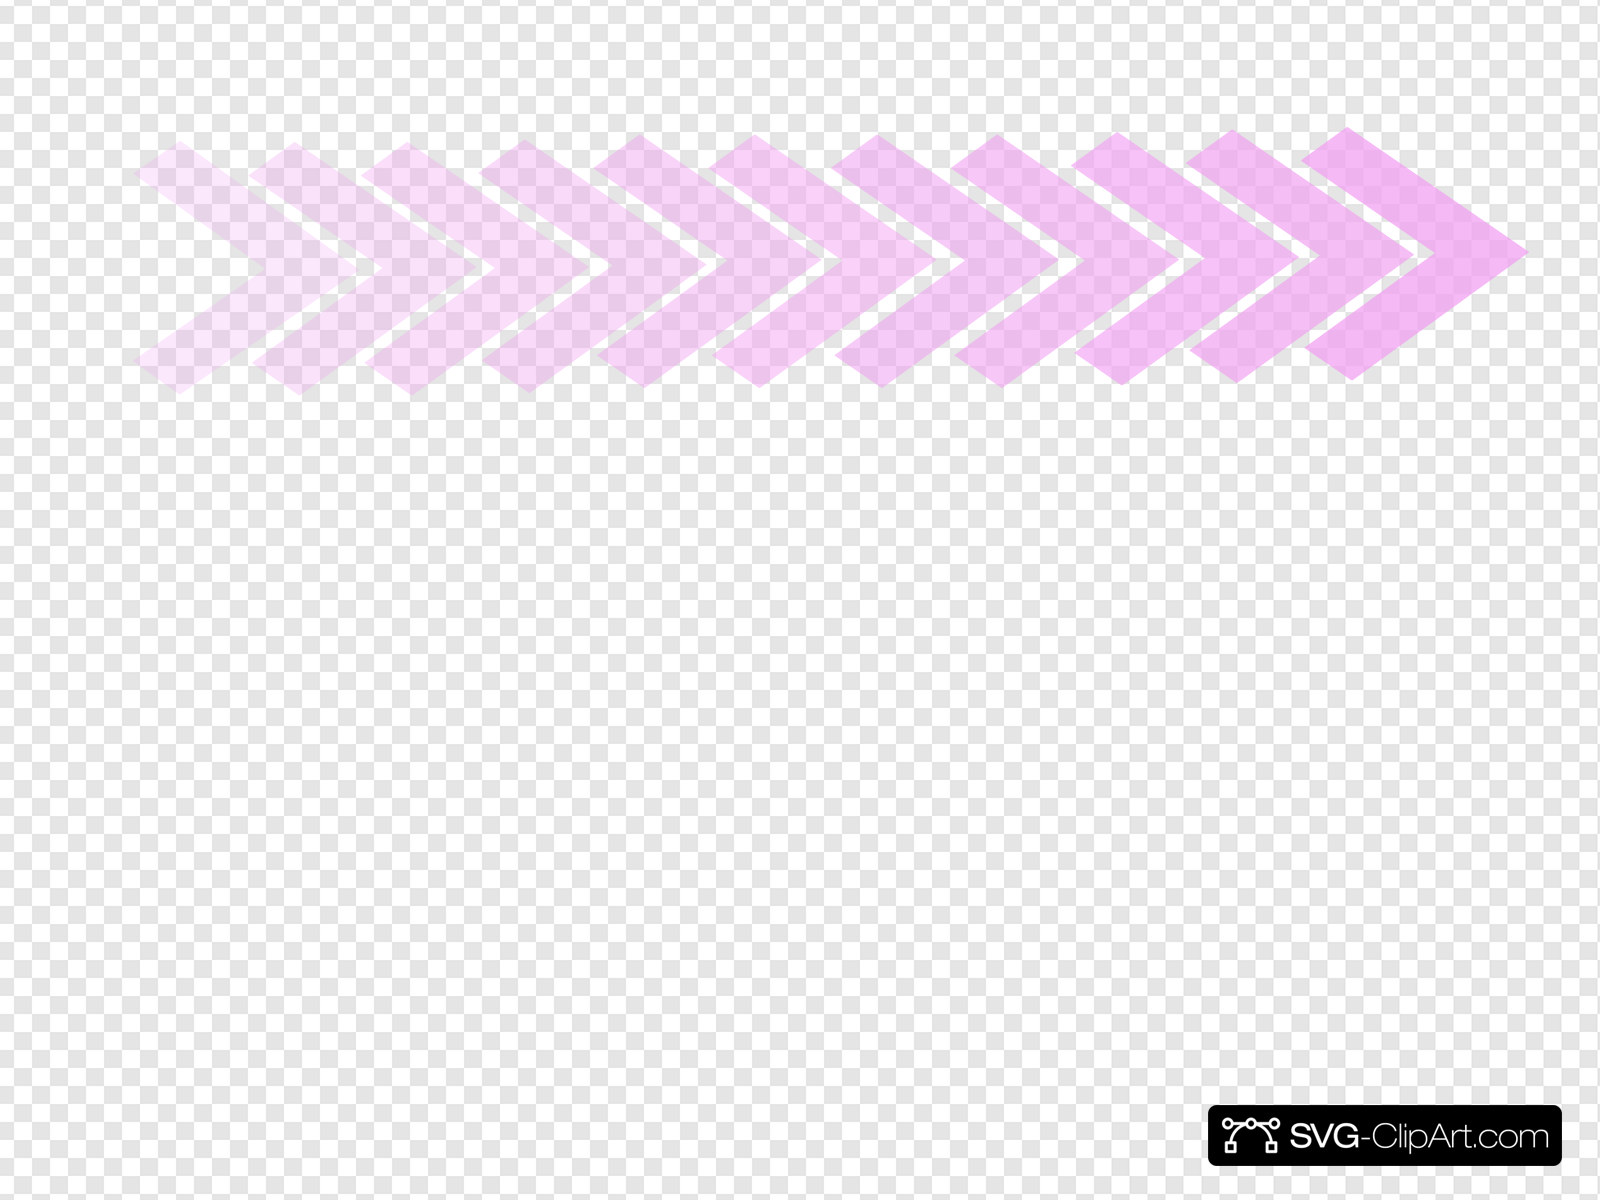 Pink Ombre Chevron Arrow Clip art, Icon and SVG.